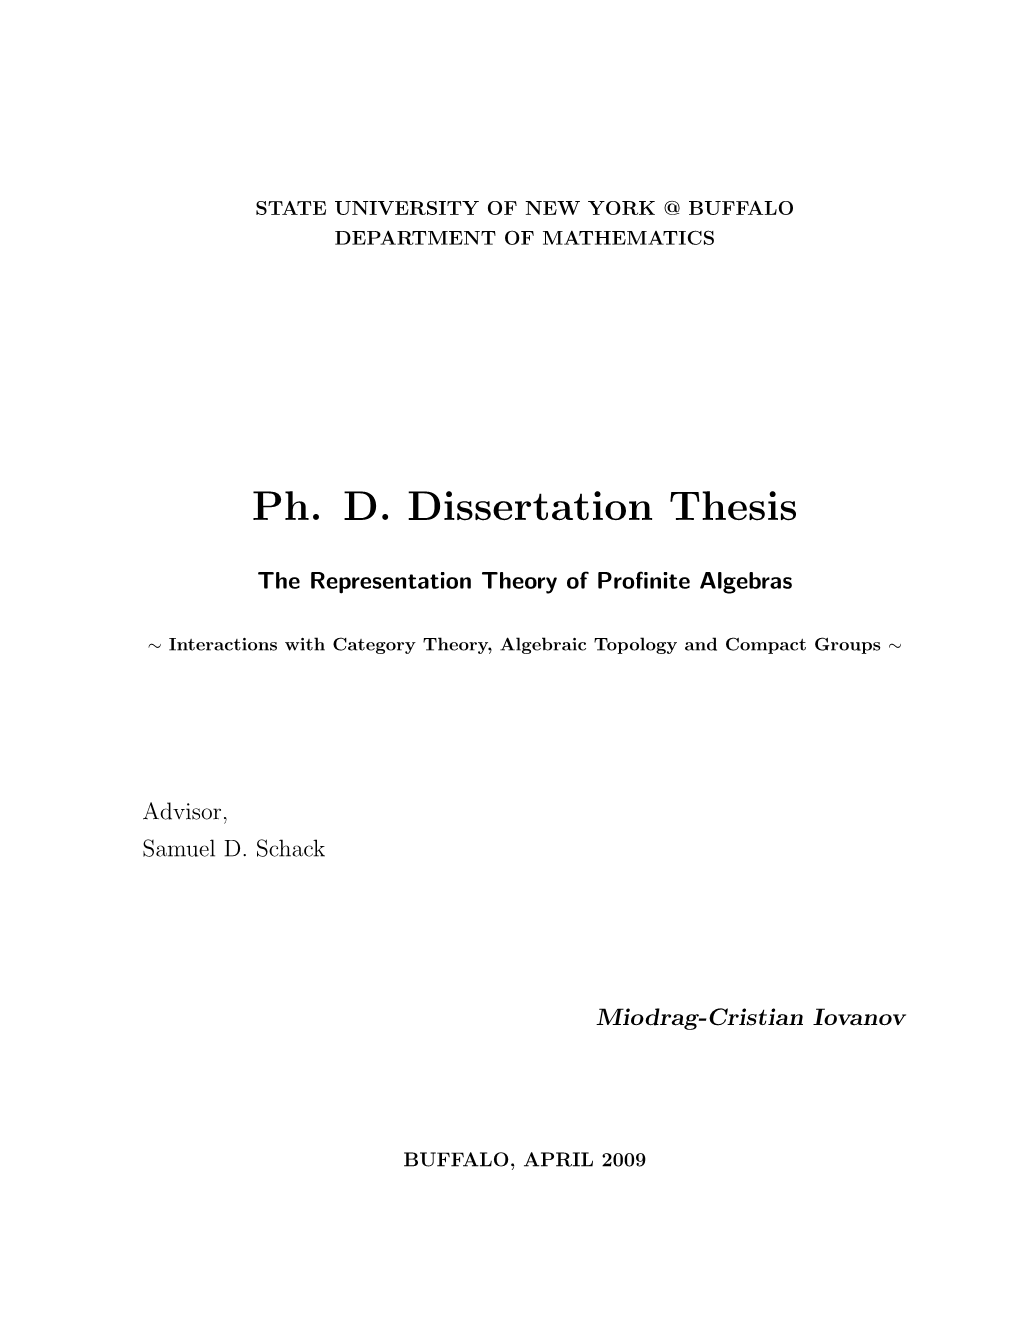 Ph. D. Dissertation Thesis